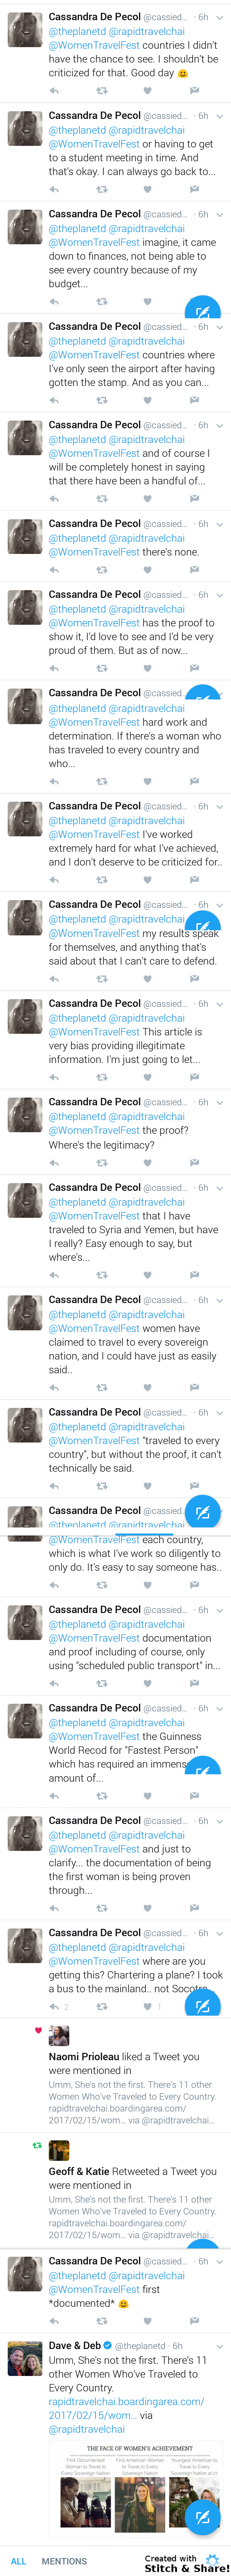 Cassie DePecol Tweet Response 16Feb2017